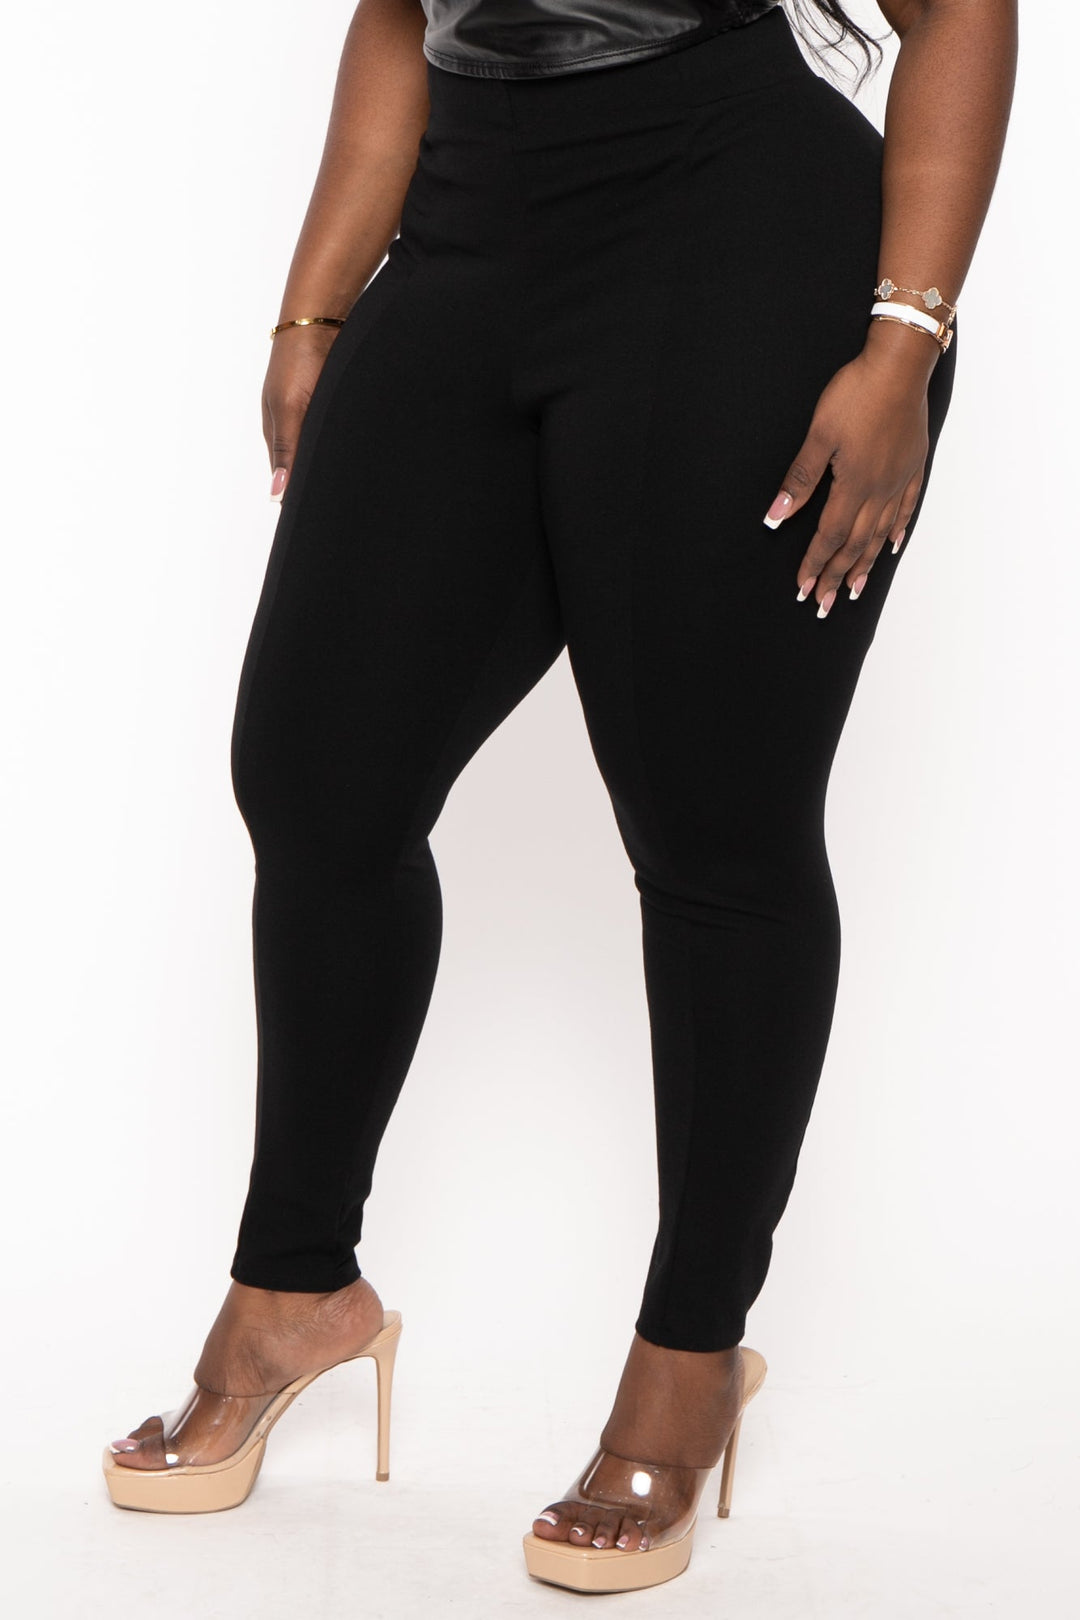 Plus Size Belleann High Waist Ponti Leggings- Black – Curvy Sense